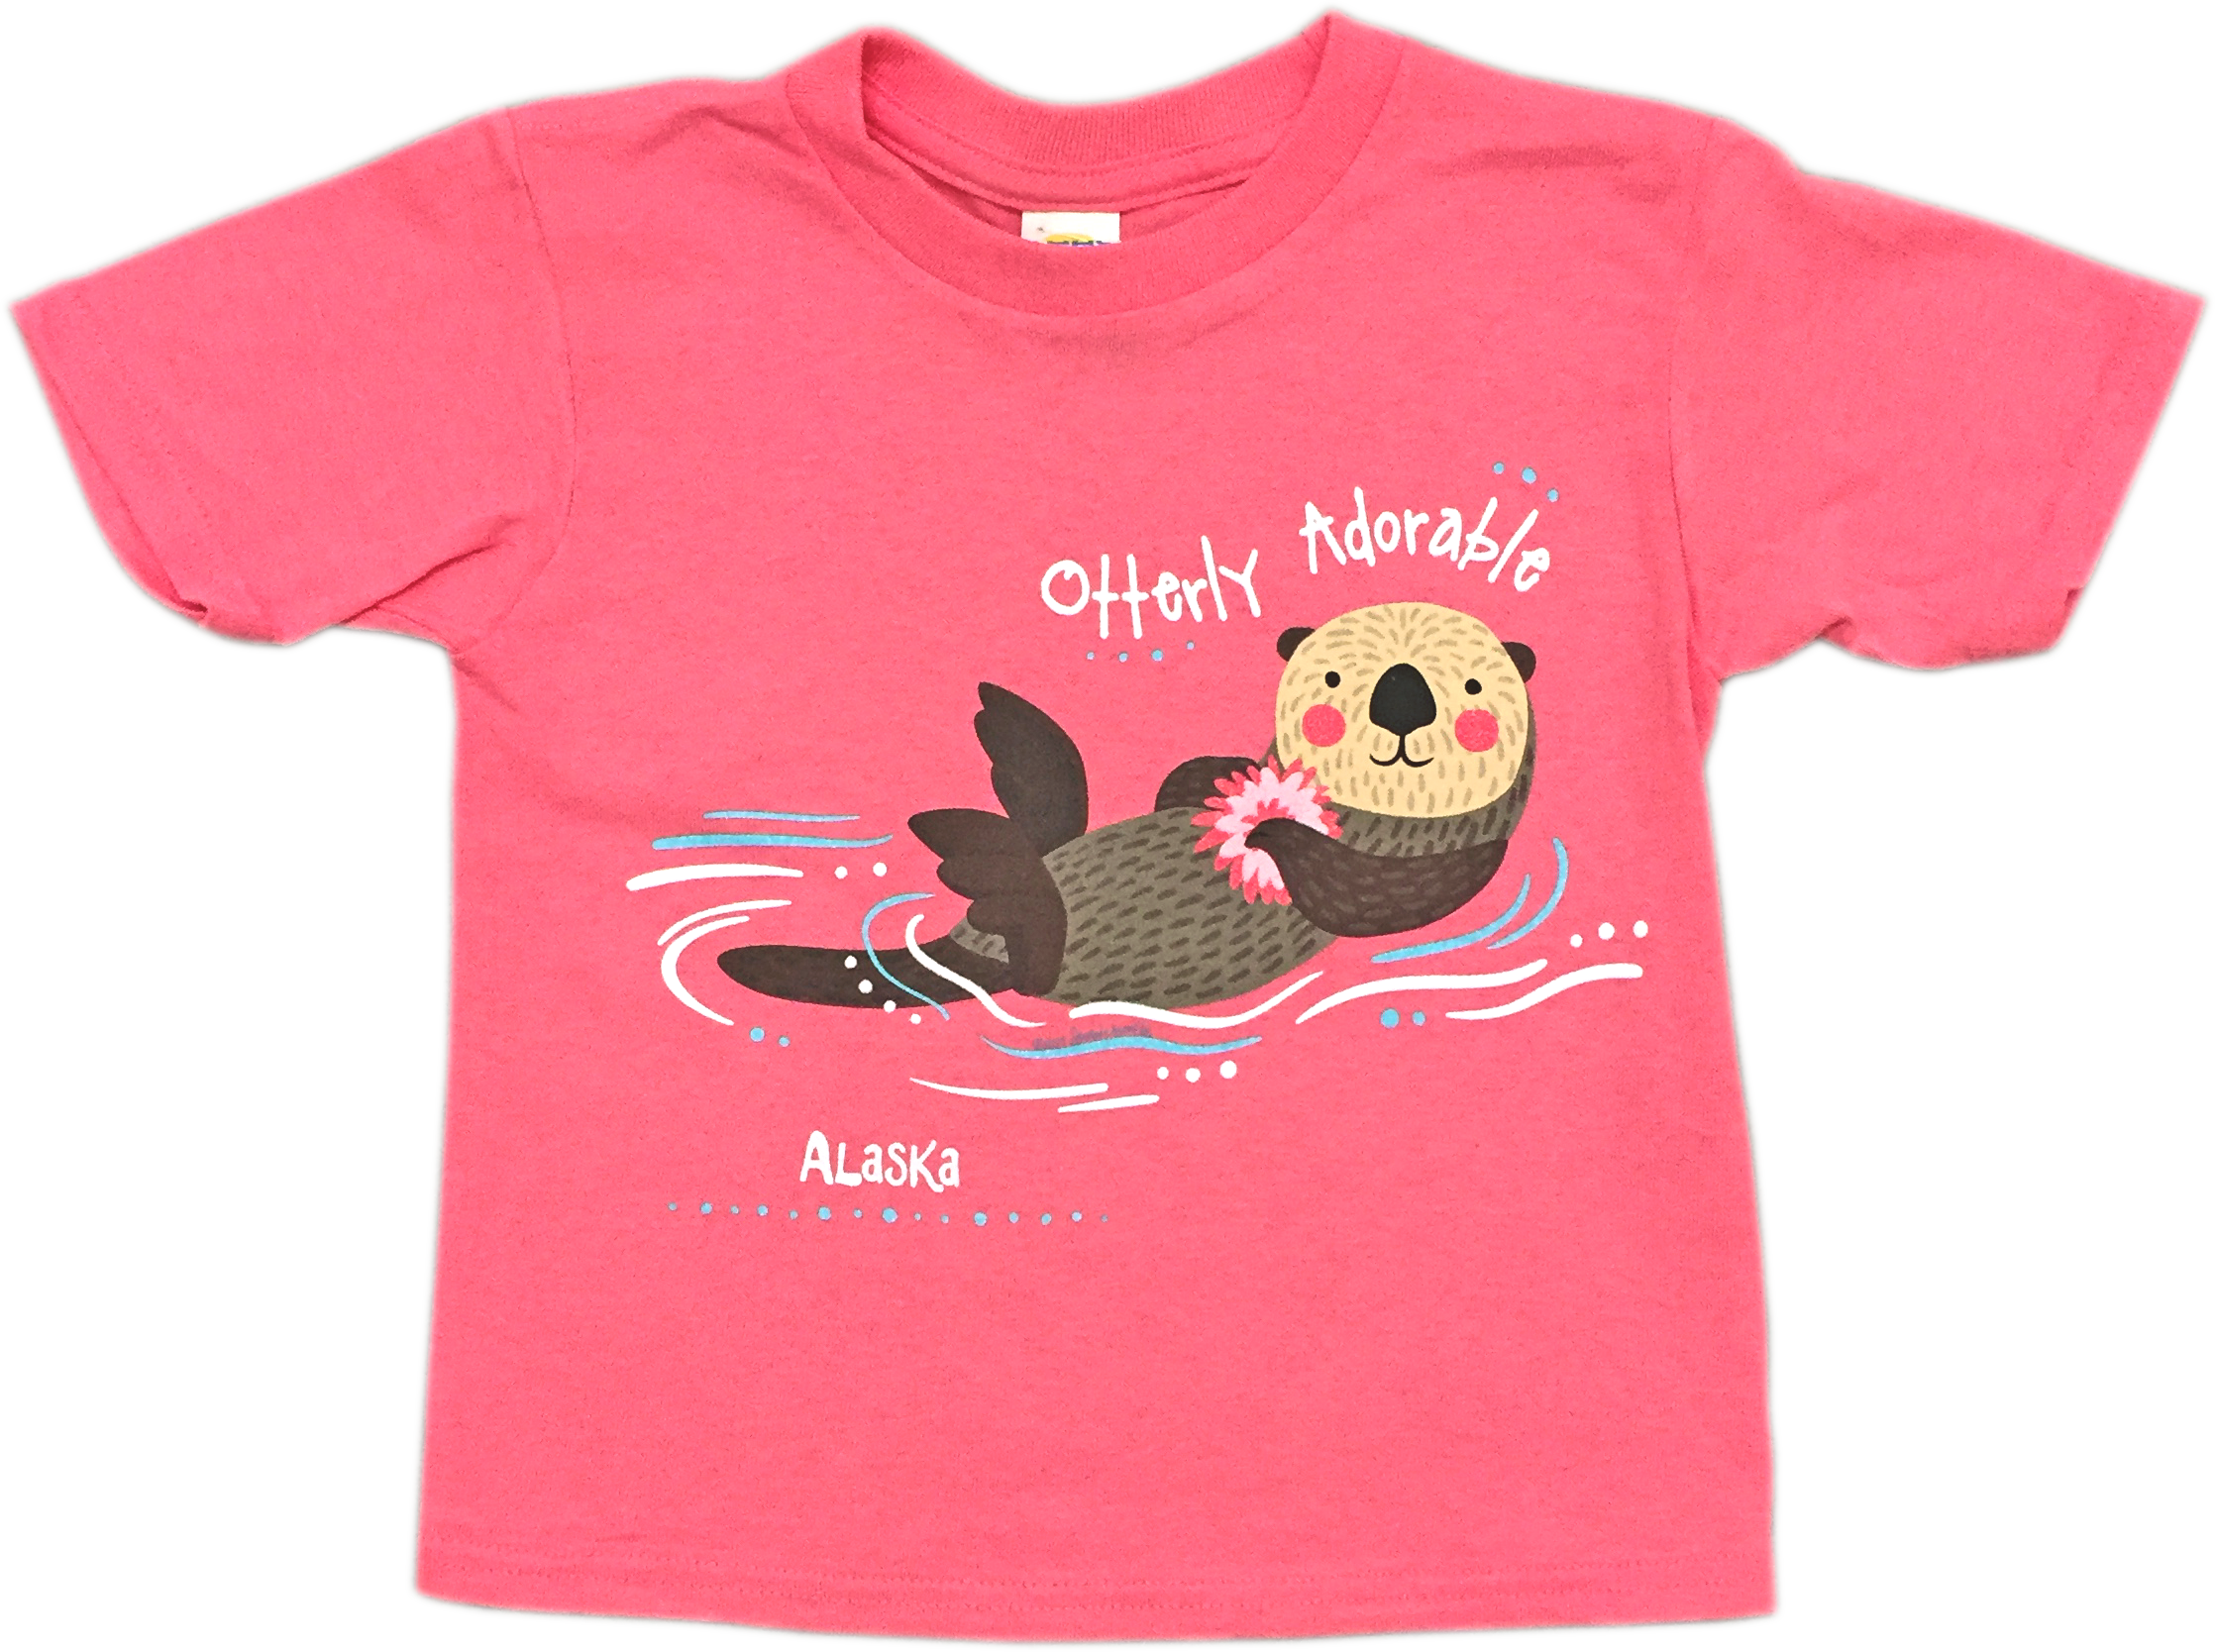 Otterly Adorable Alaska Toddler T-shirt